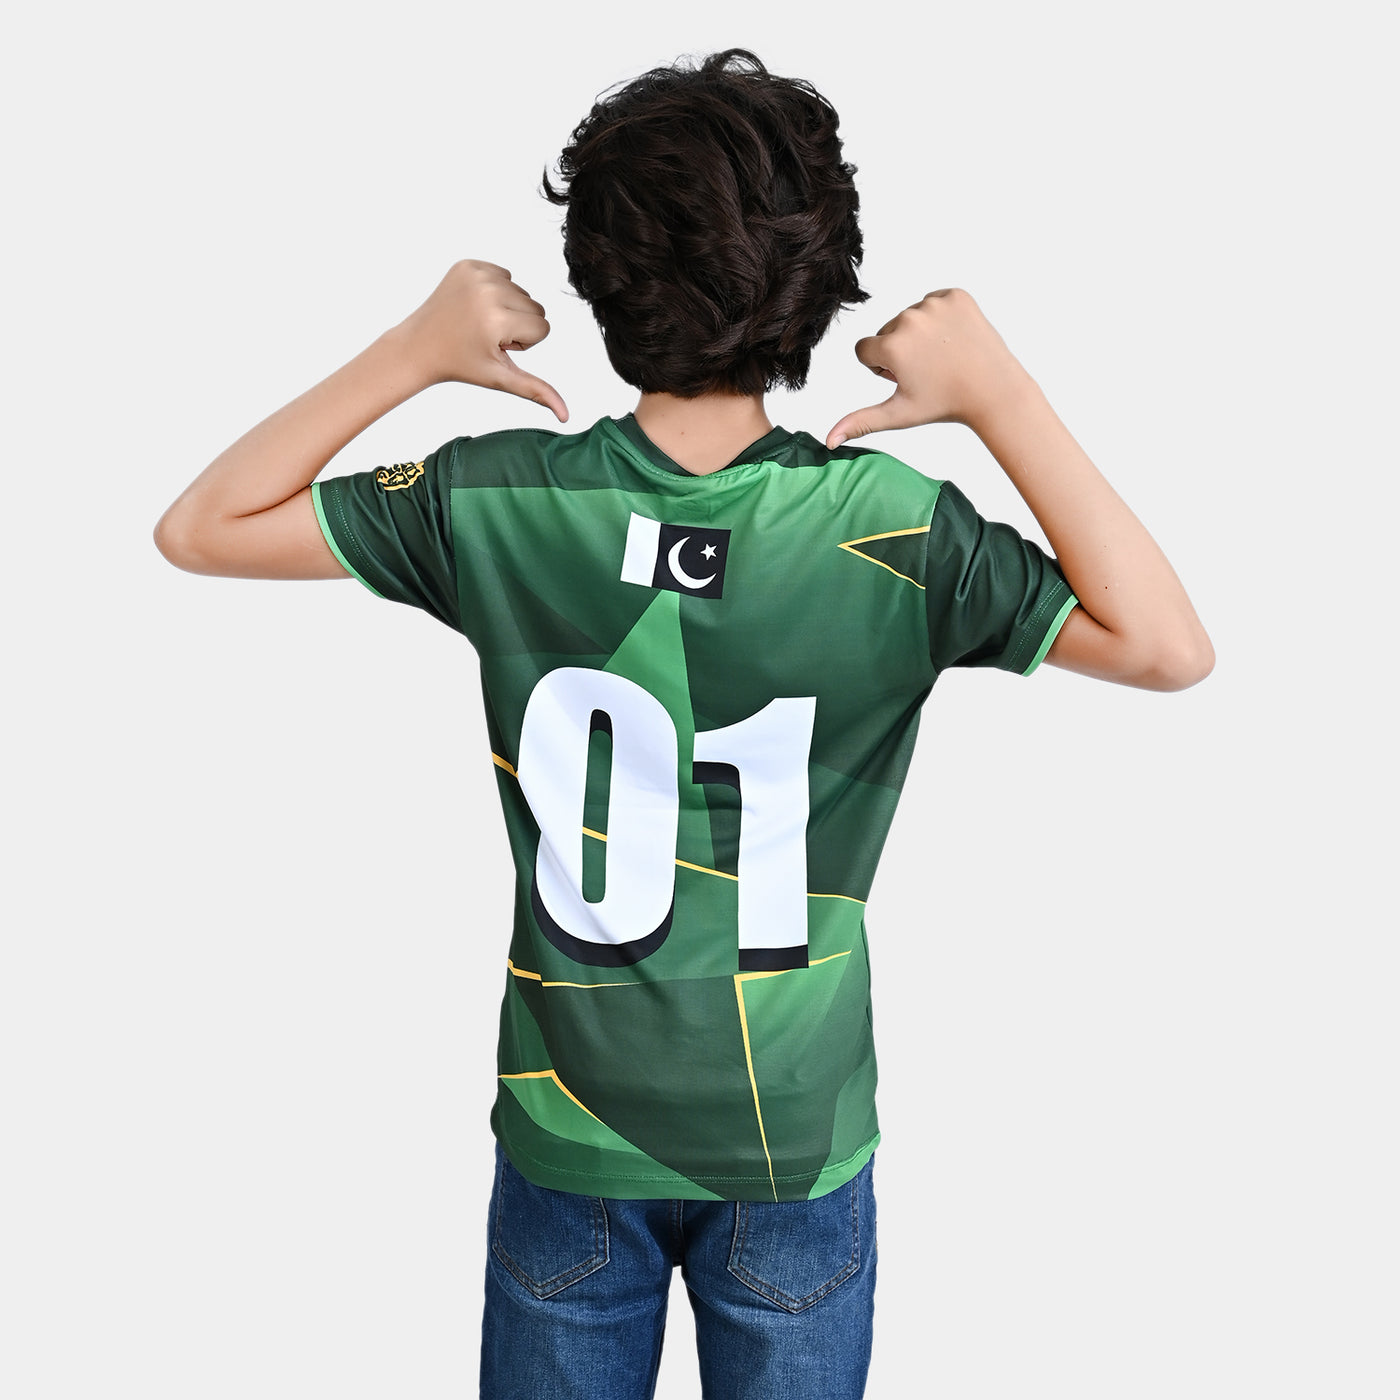 Boys Cotton Jersey T-Shirt Pakistan - Green